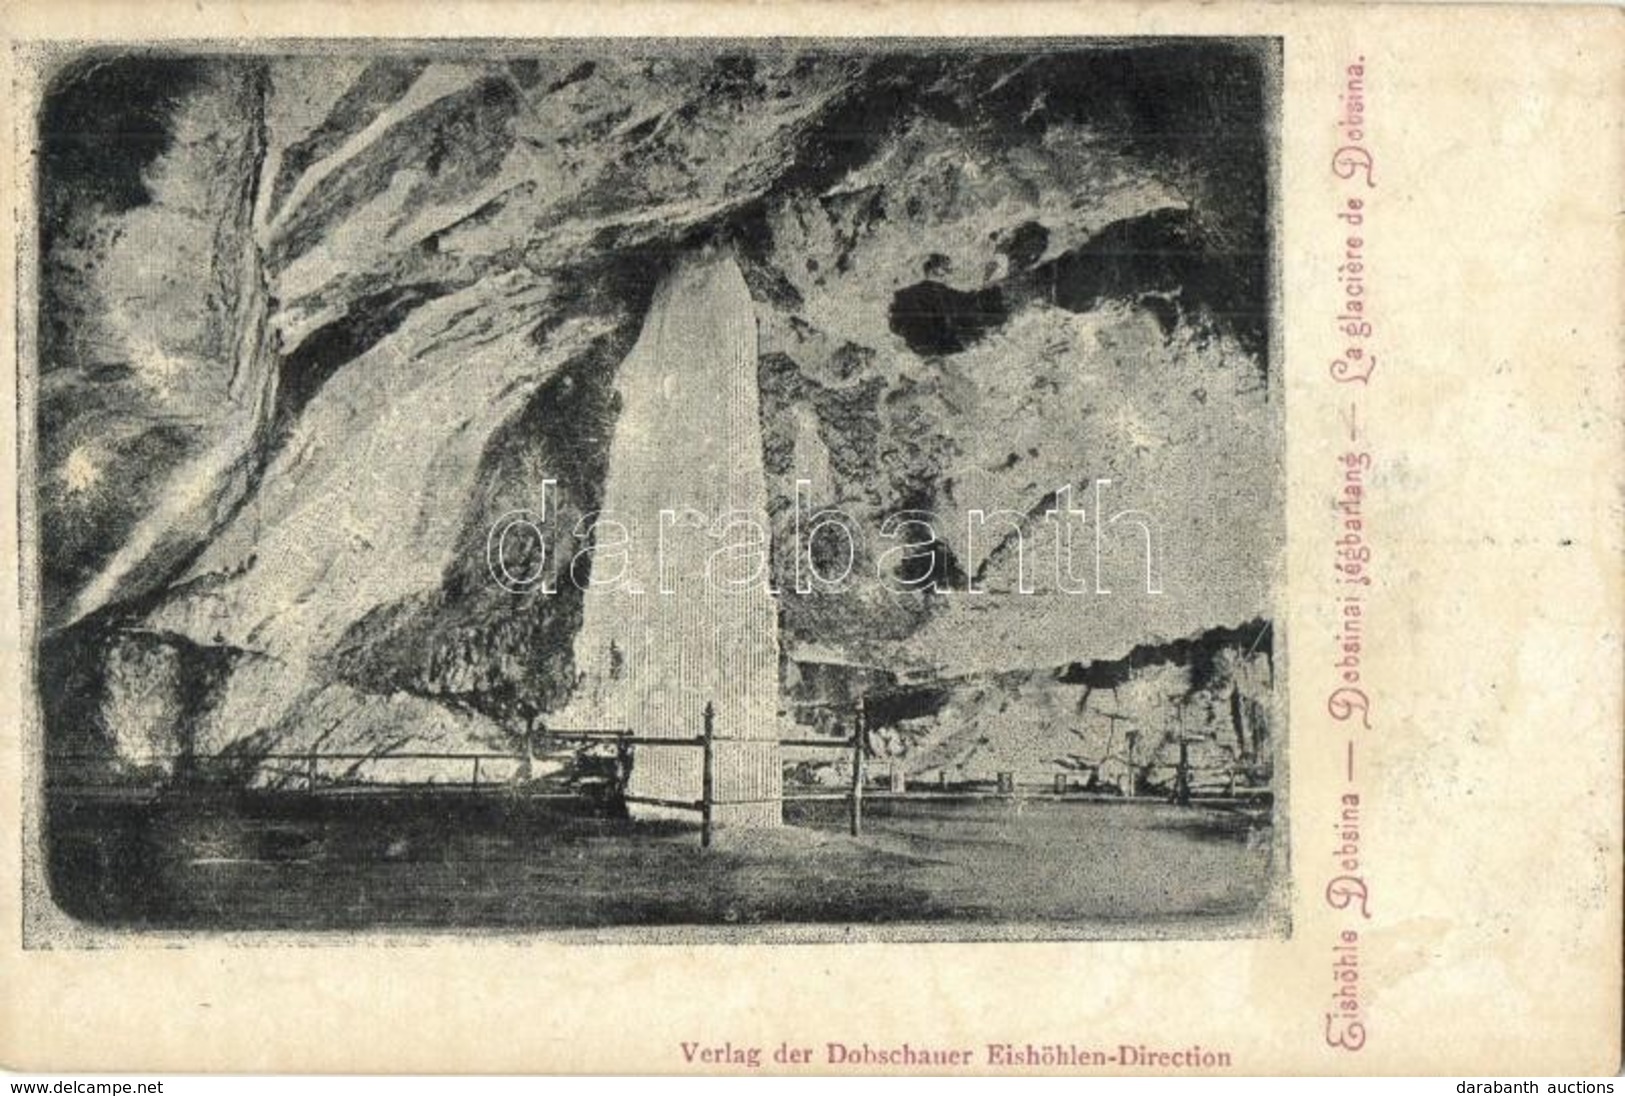 ** T2/T3 Dobsina, Dobschau; Eishöhle Dobsina / Dobsinai Jégbarlang, Belső / La Grotte Glaciere De Dobsina / Ice Cave Int - Unclassified